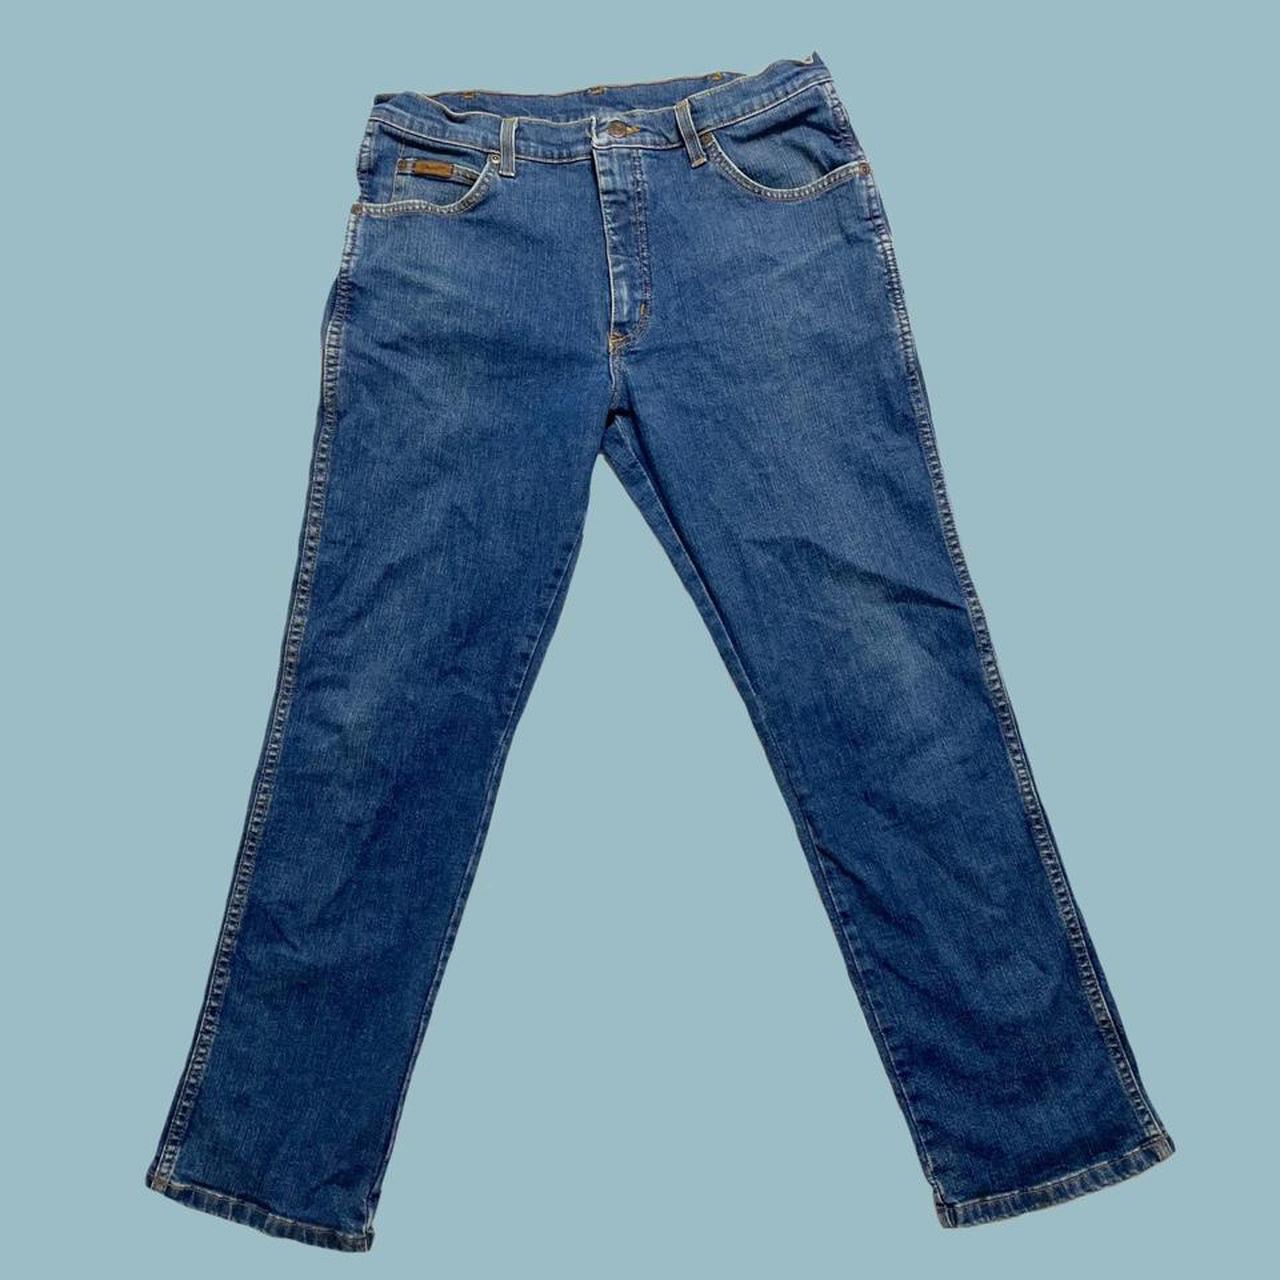 Wrangler Denim Jeans Authentic Wrangler jeans,... - Depop